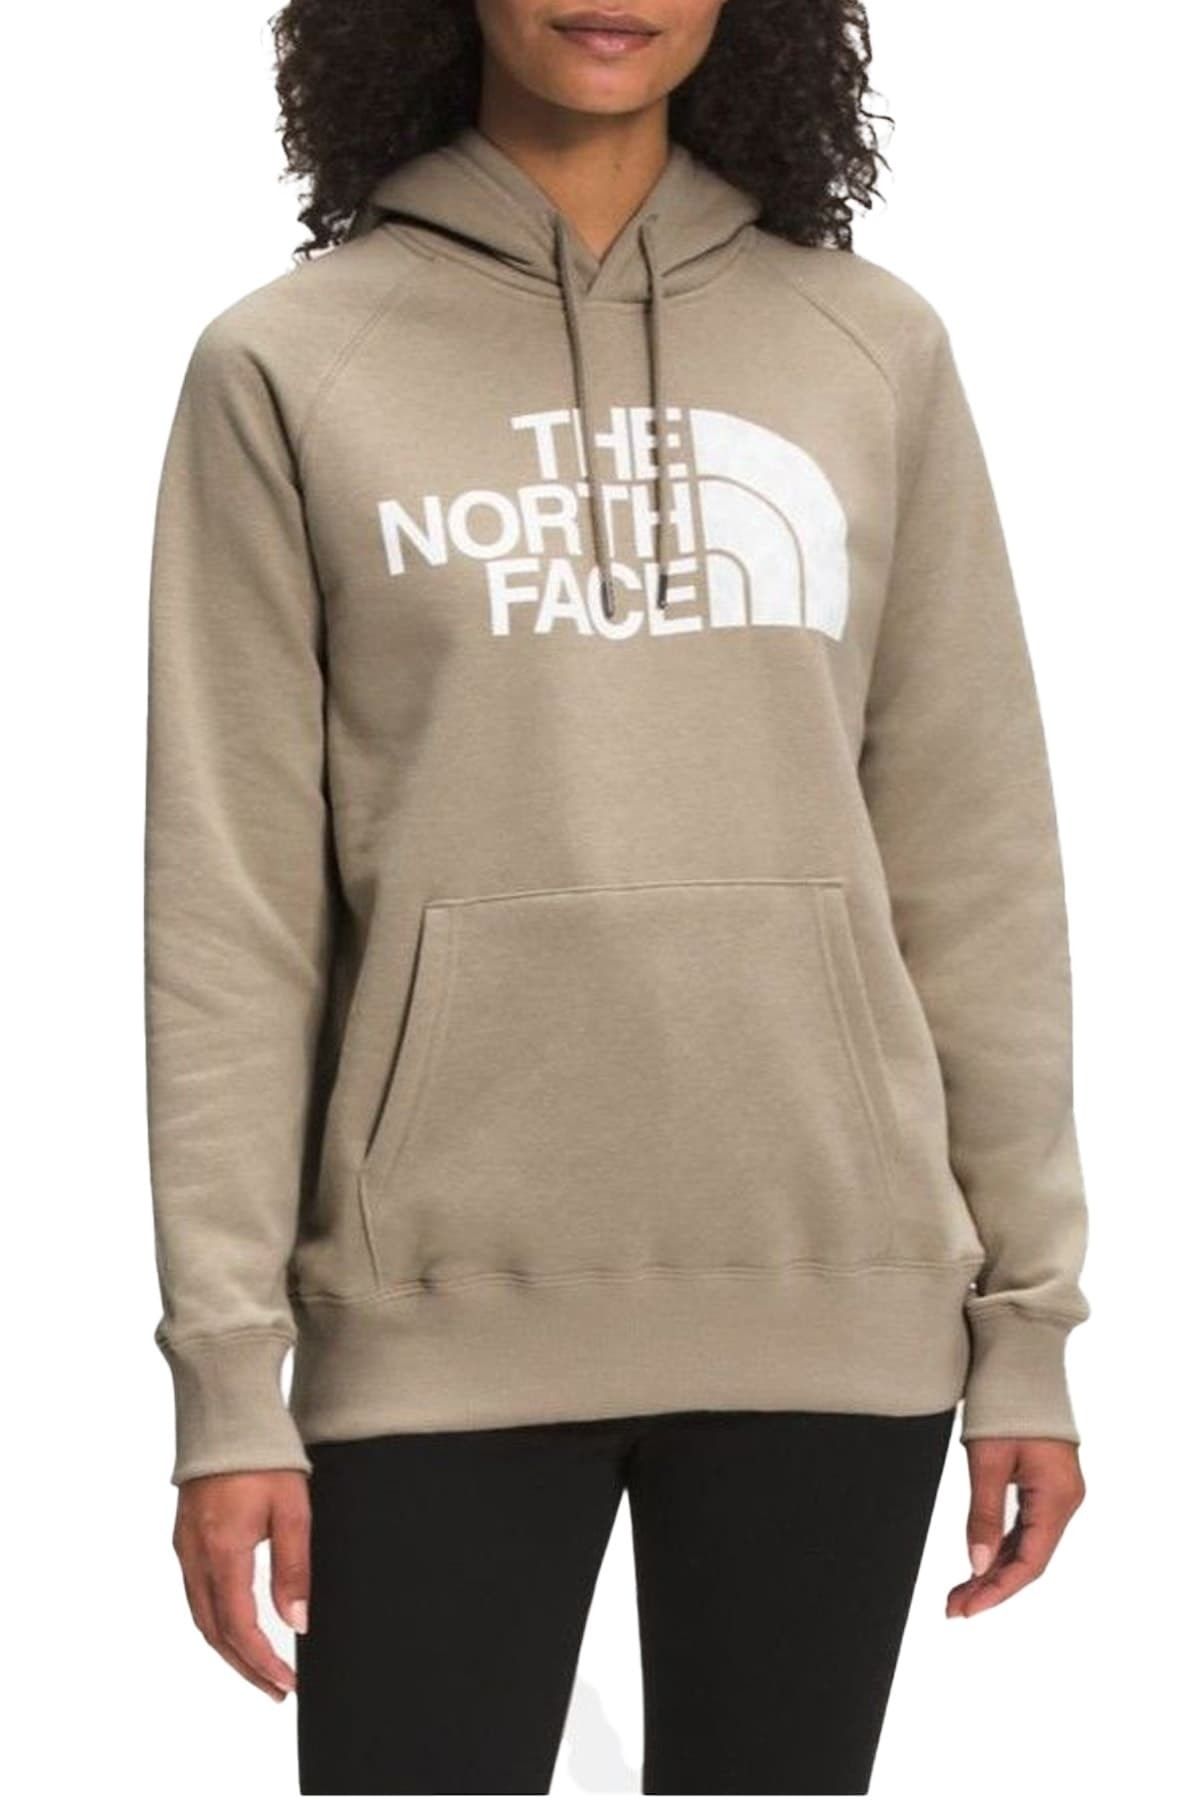 The North Face Hd Pullover Hd Kadın Sweatshirt - Nf0a4m8p